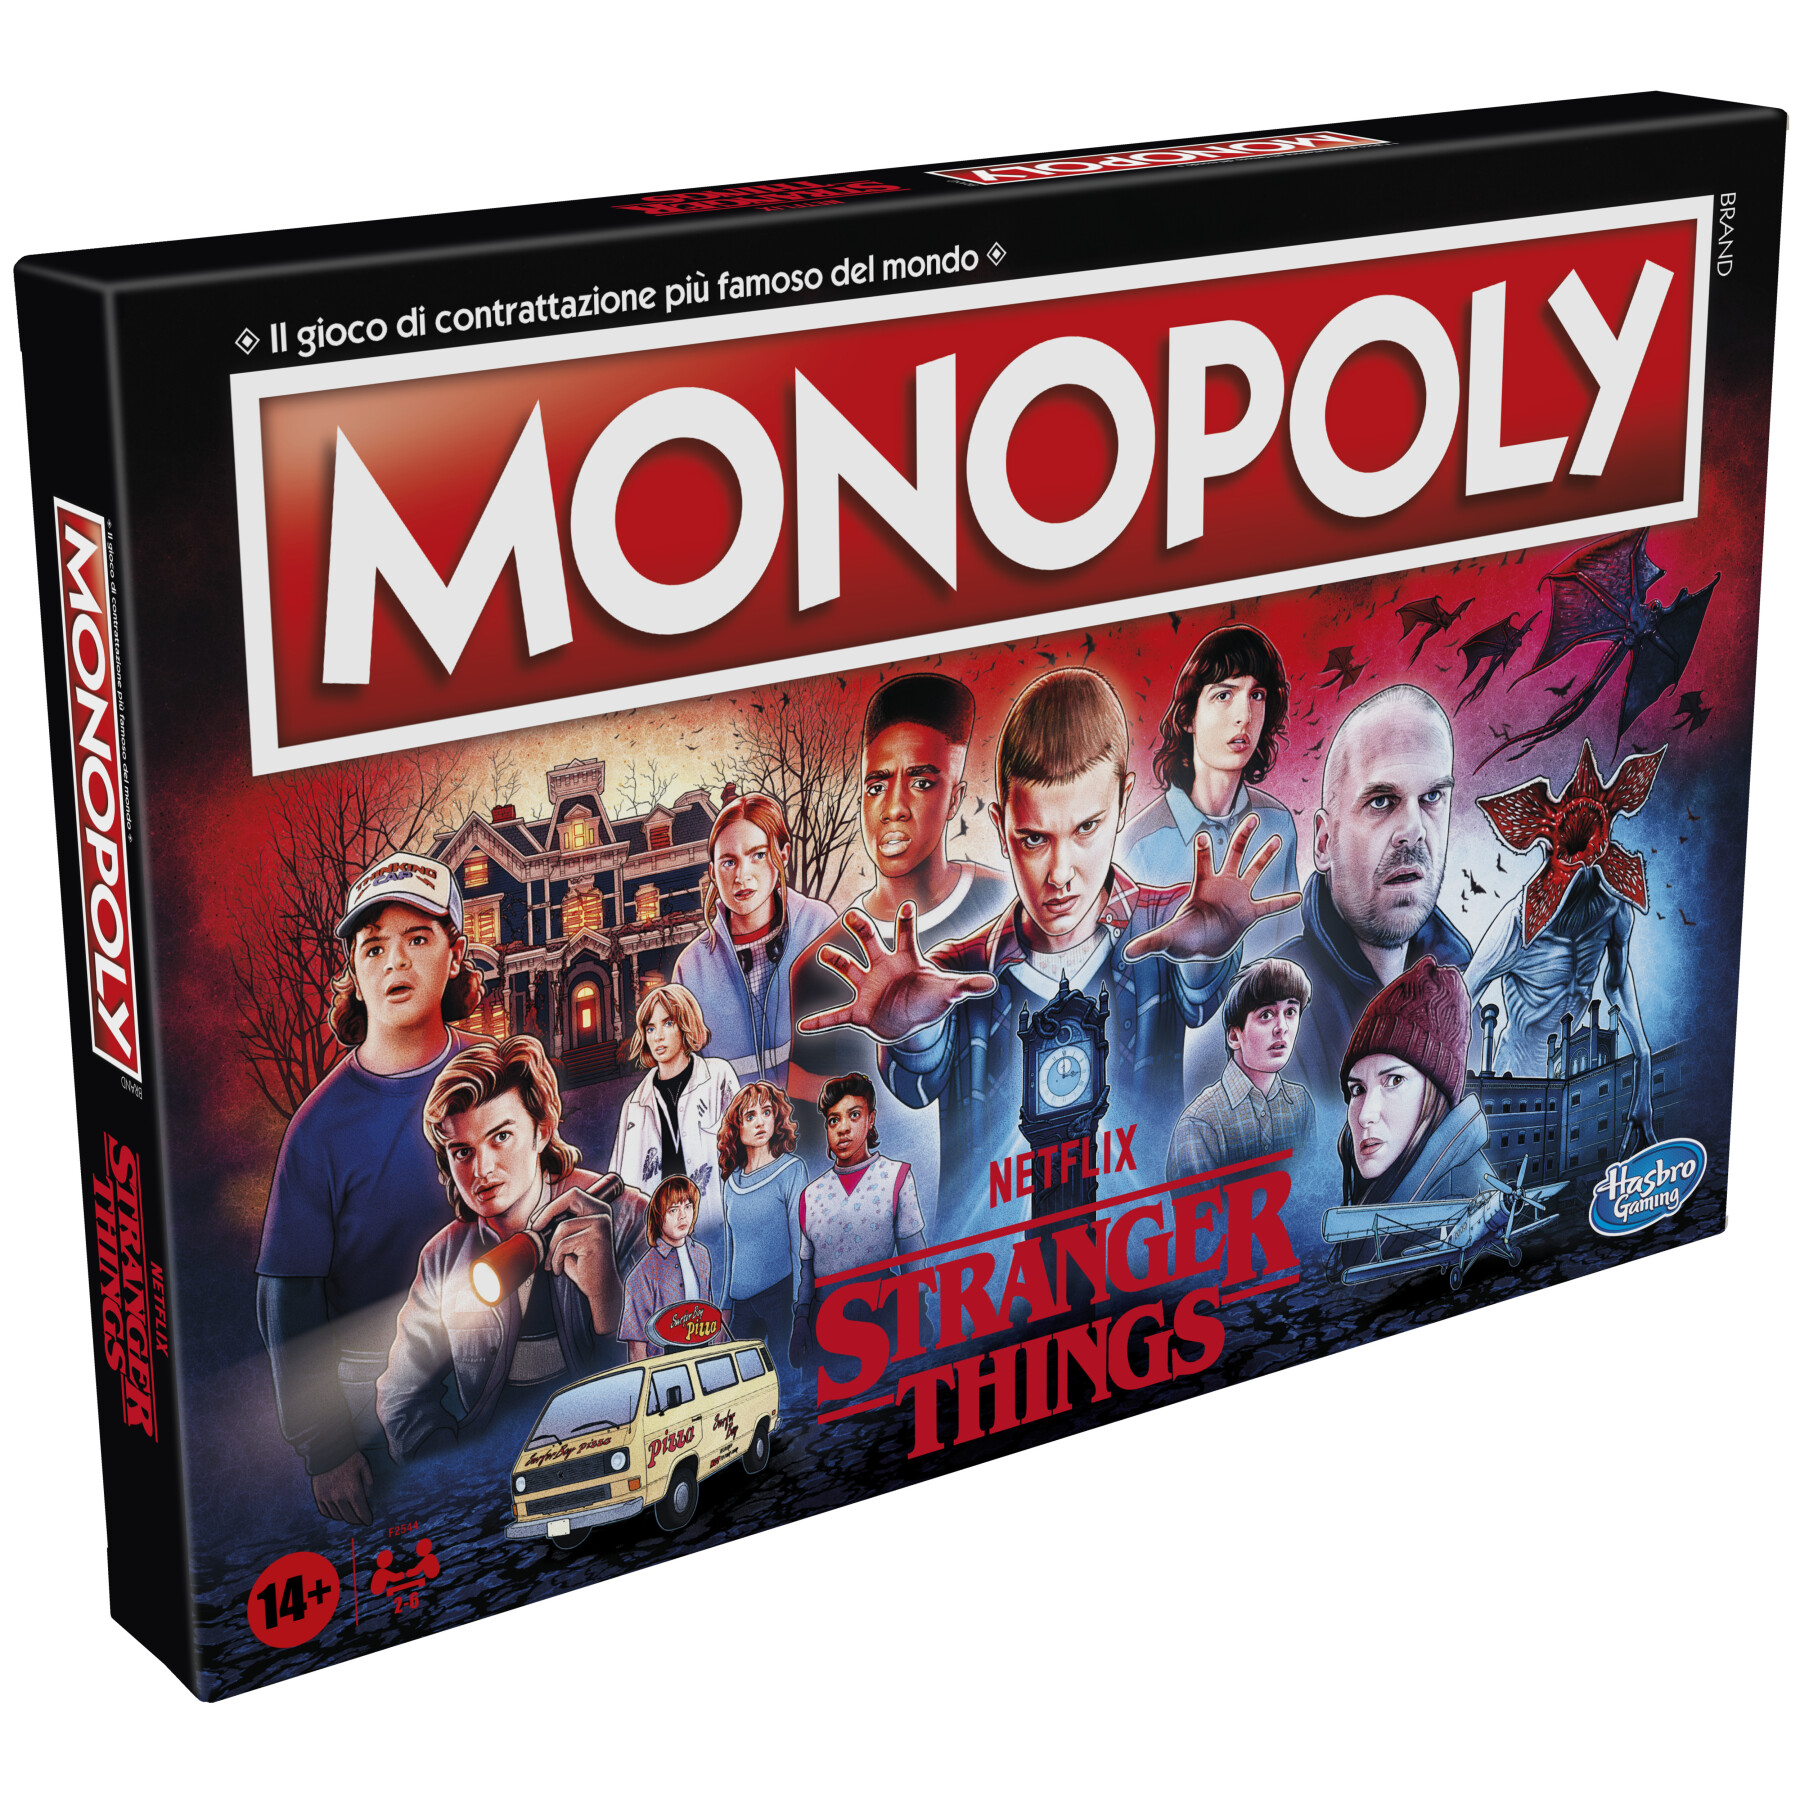 Monopoly stranger things (ispirato alla 4 stagione di netflix "stranger things") - MONOPOLY